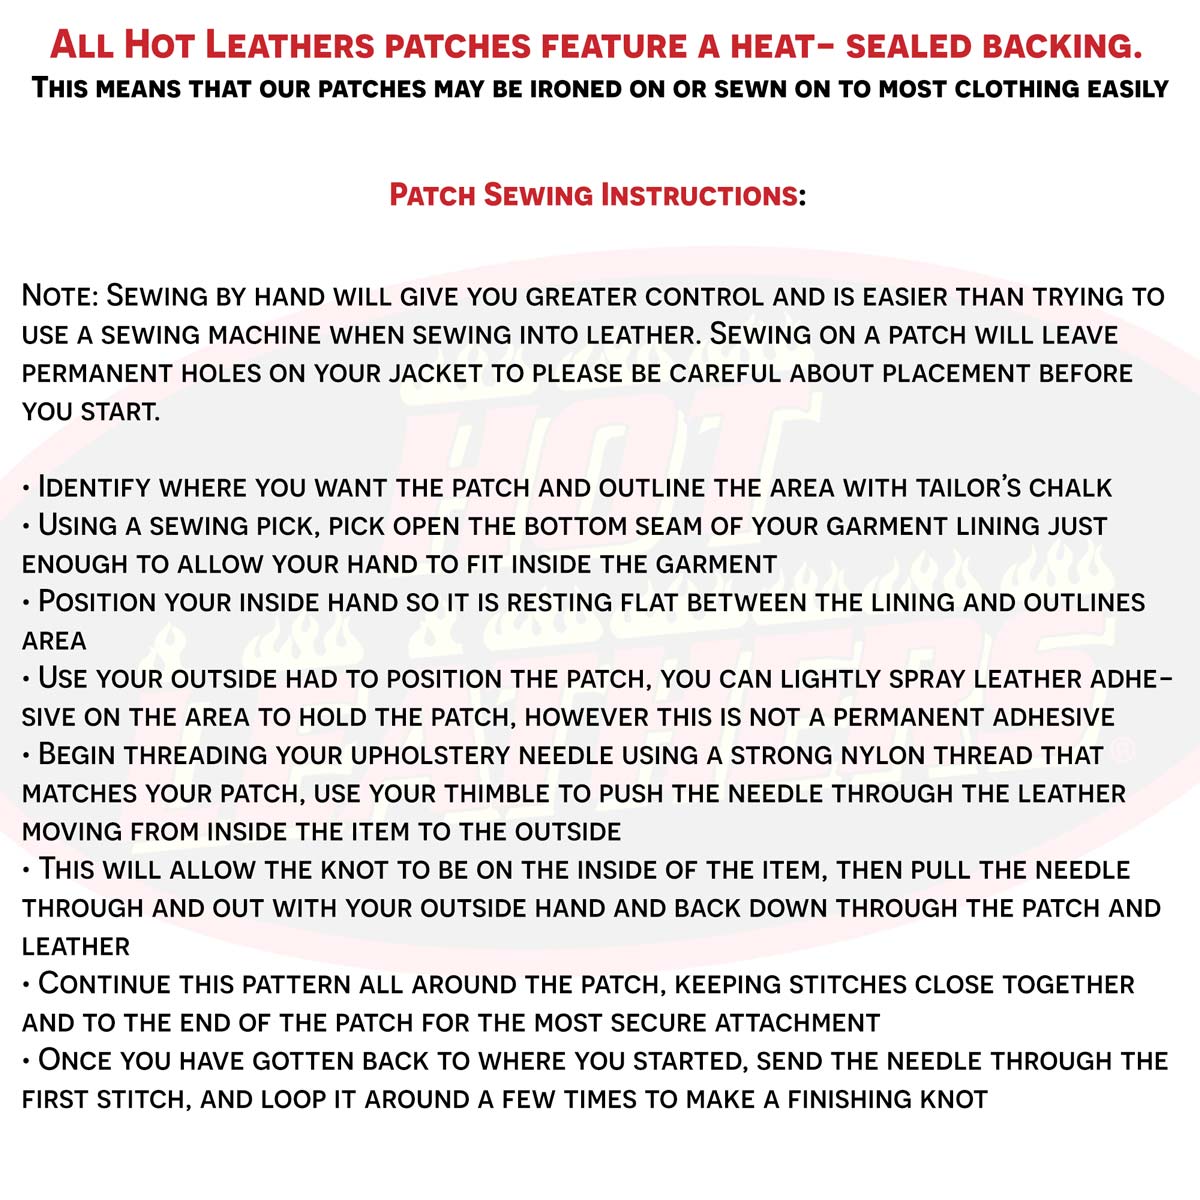 Hot Leathers Work Sucks - Let's Ride 12” X 3” Bottom Rocker Patch PPM5213